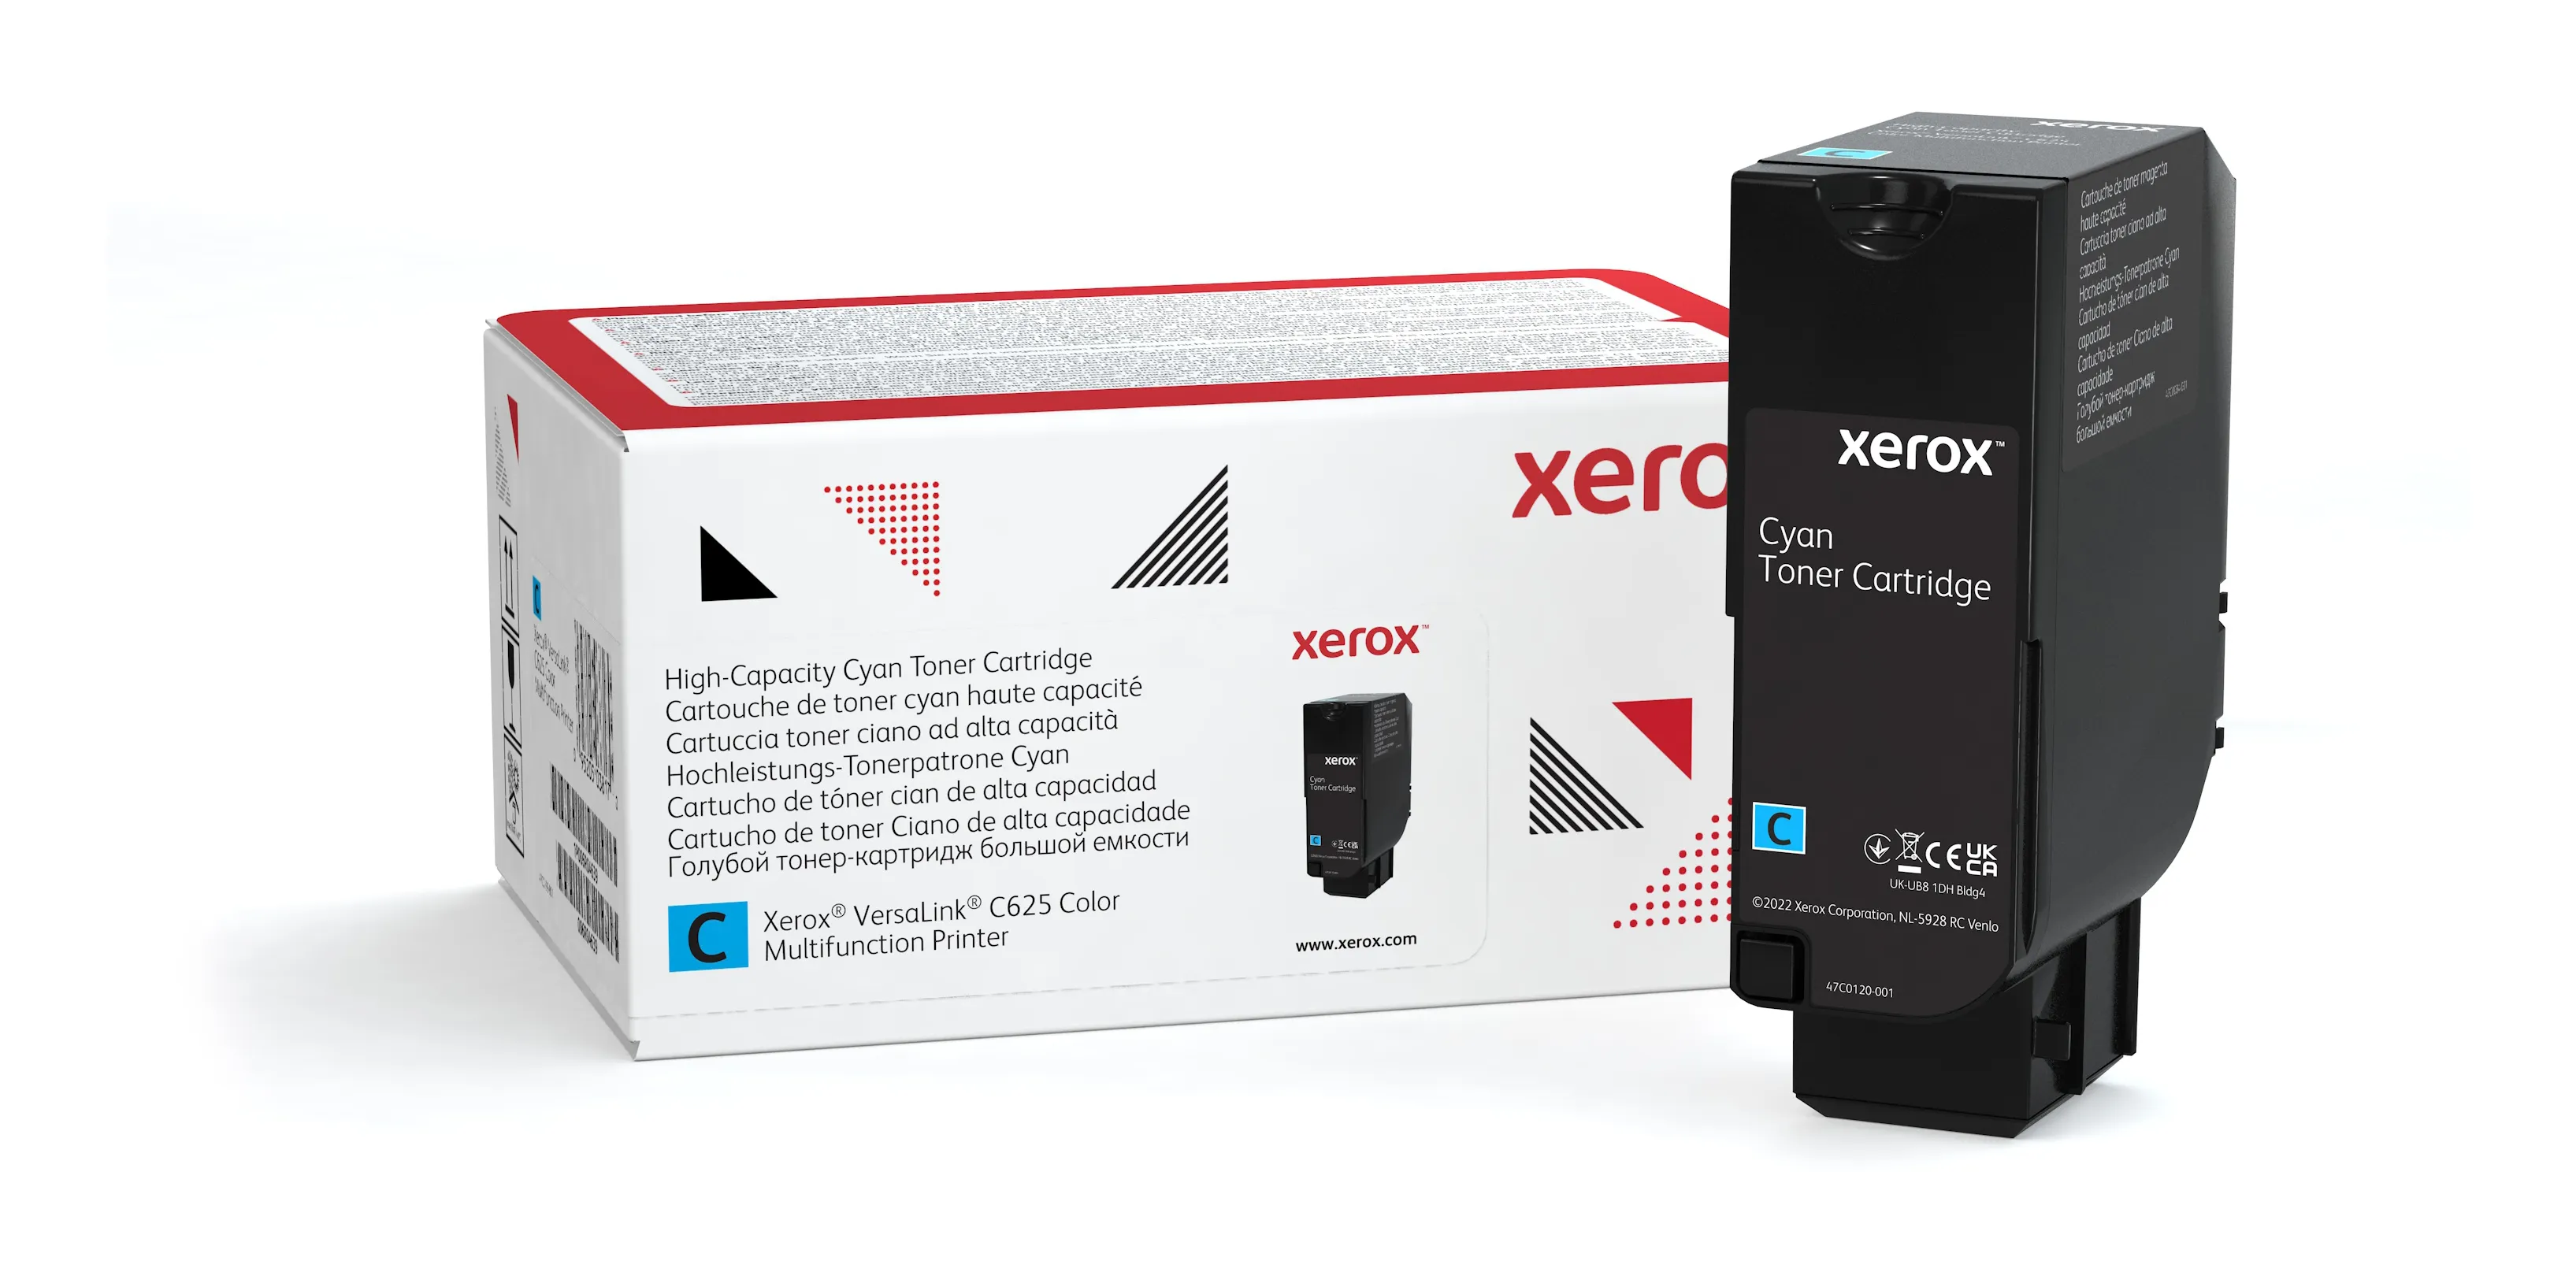 Achat XEROX VersaLink C625 Cyan High Capacity Toner Cartridge au meilleur prix